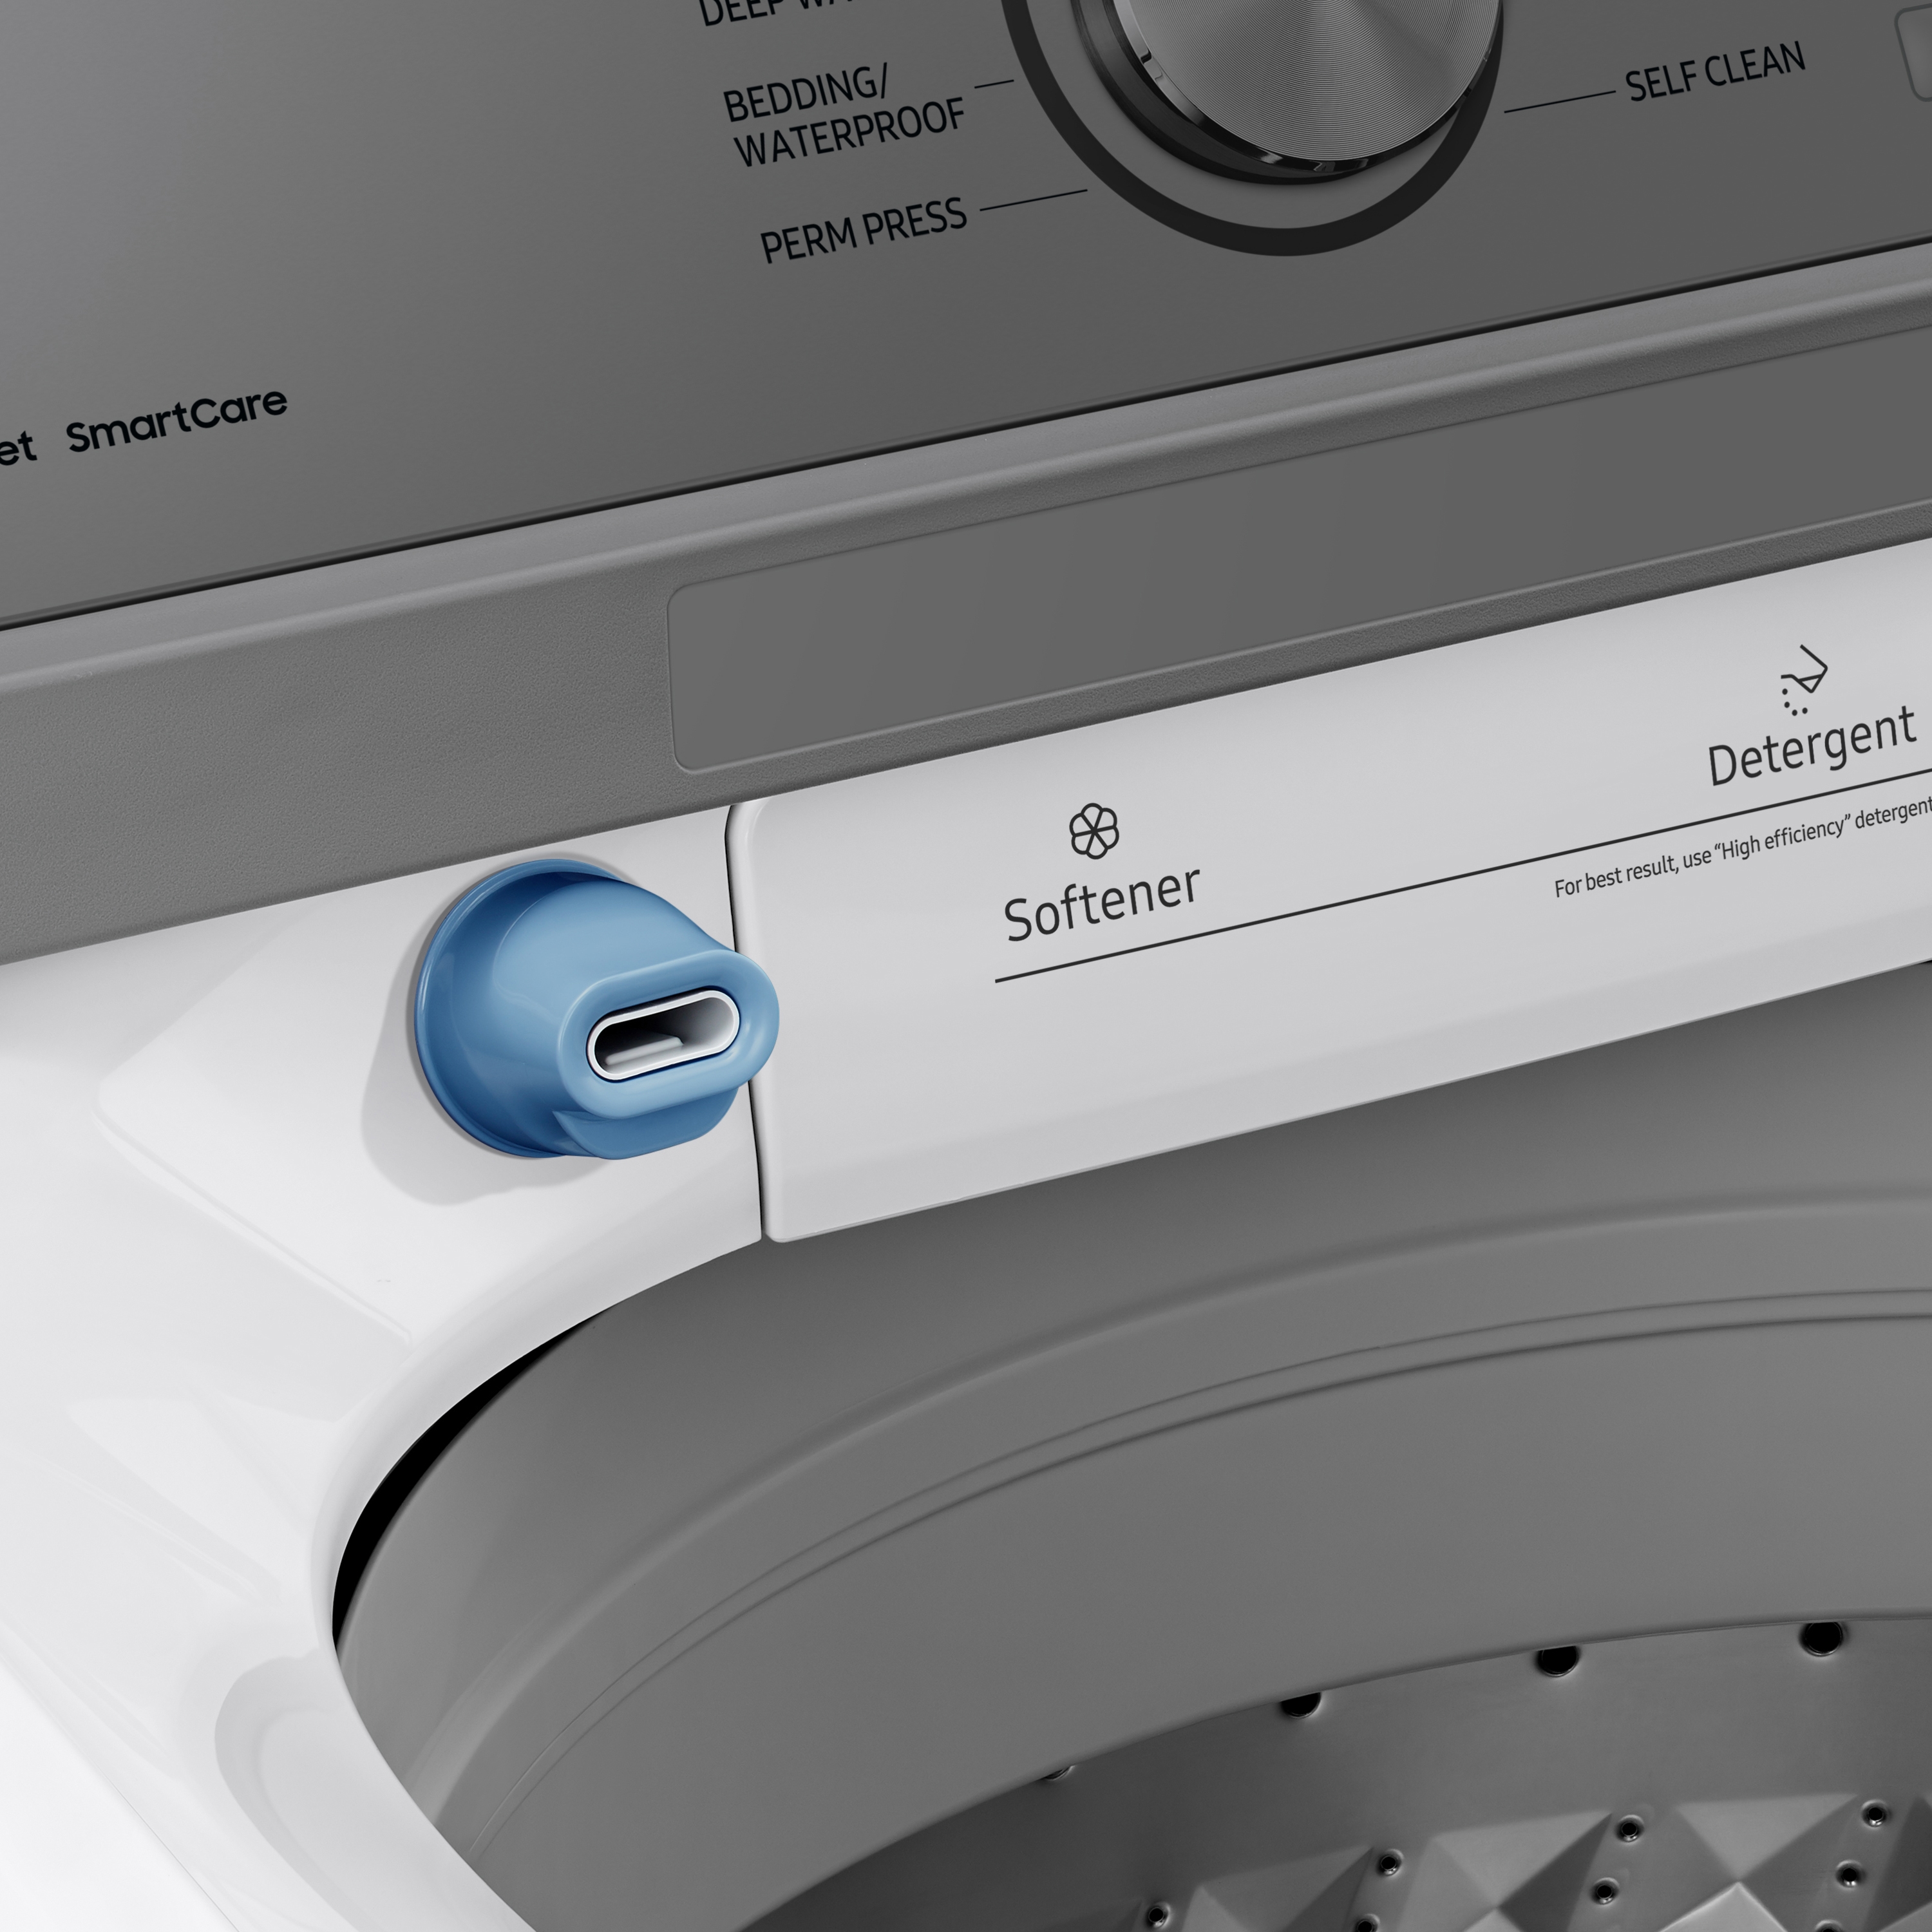 Apartment size Portable Washing Machine - appliances - by owner - sale -  craigslist